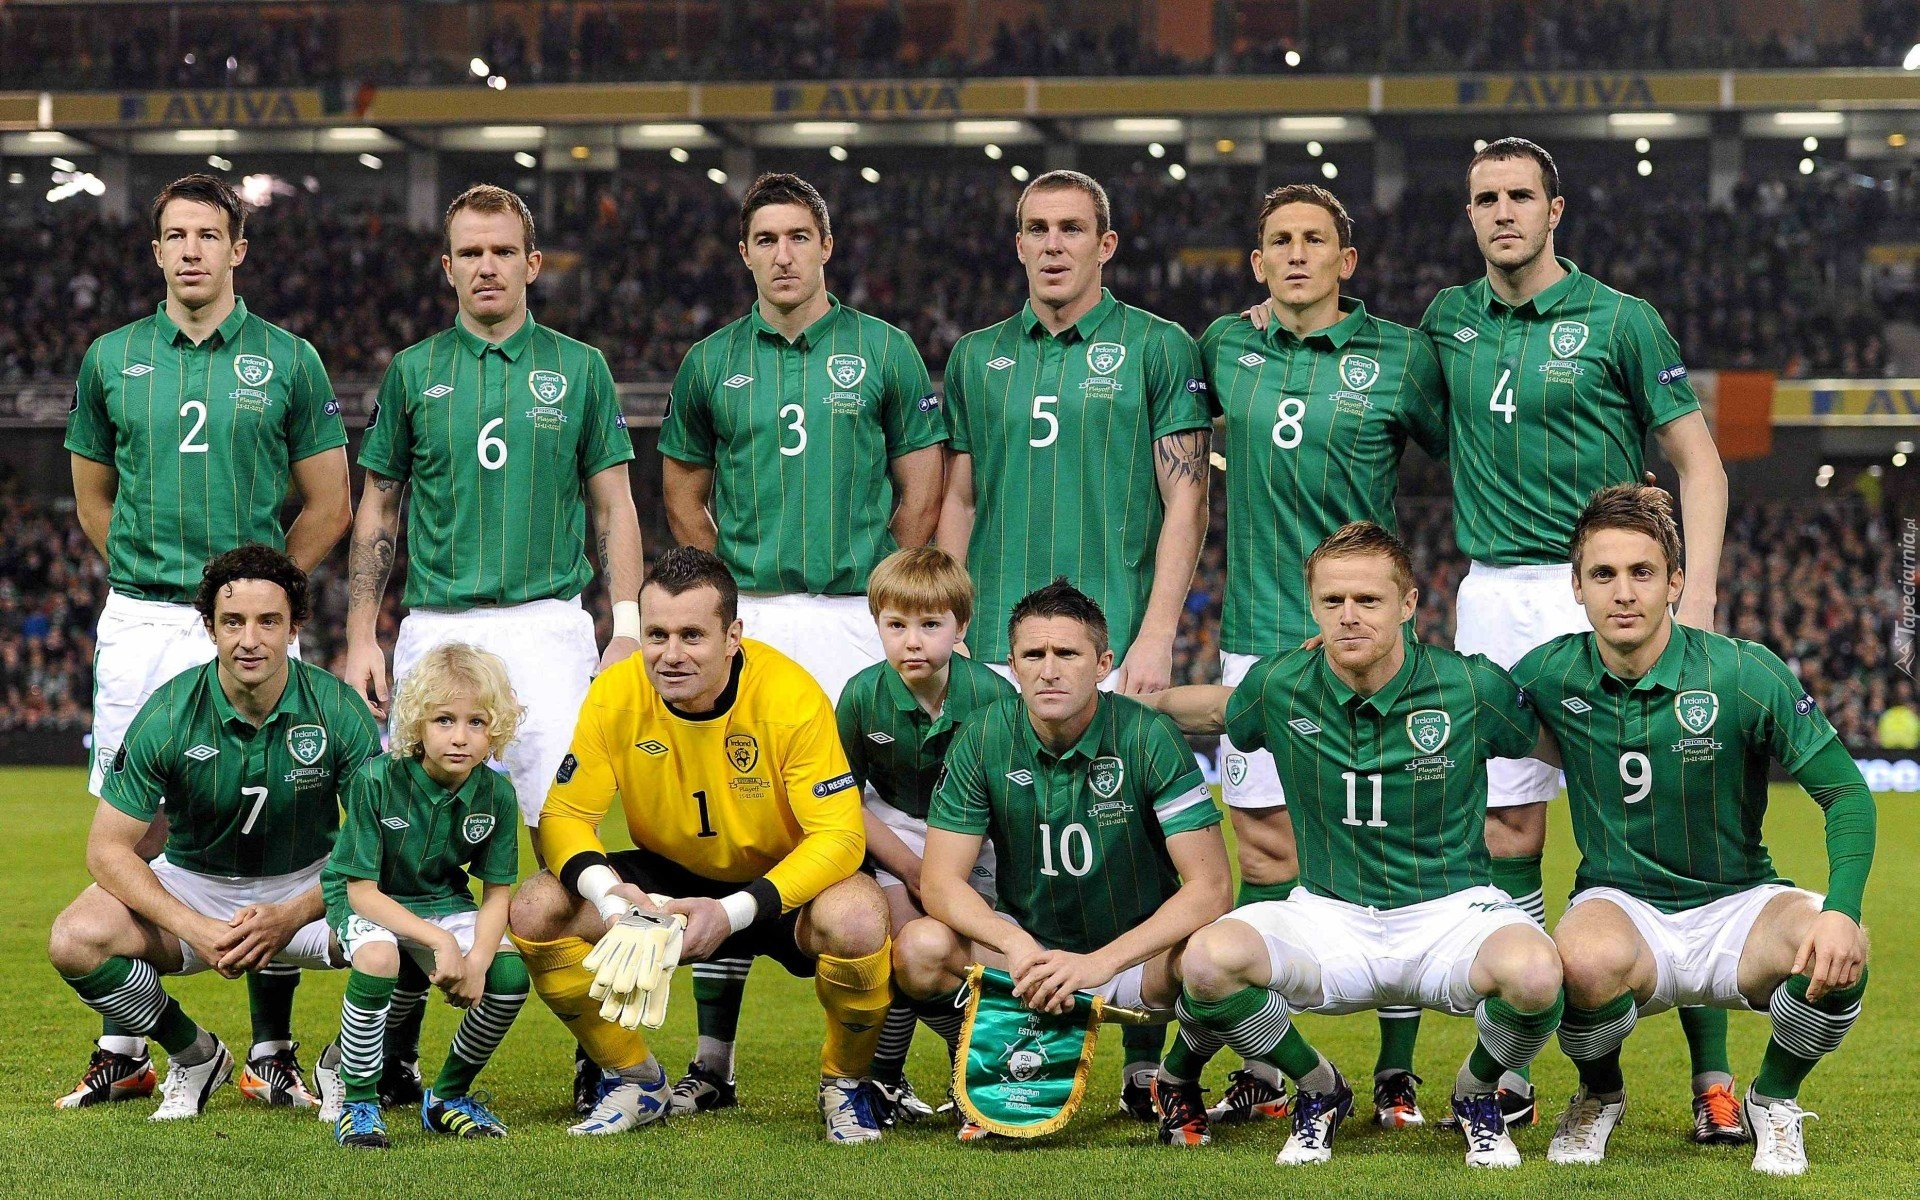 Drużyna, Irlandii, Euro 2012